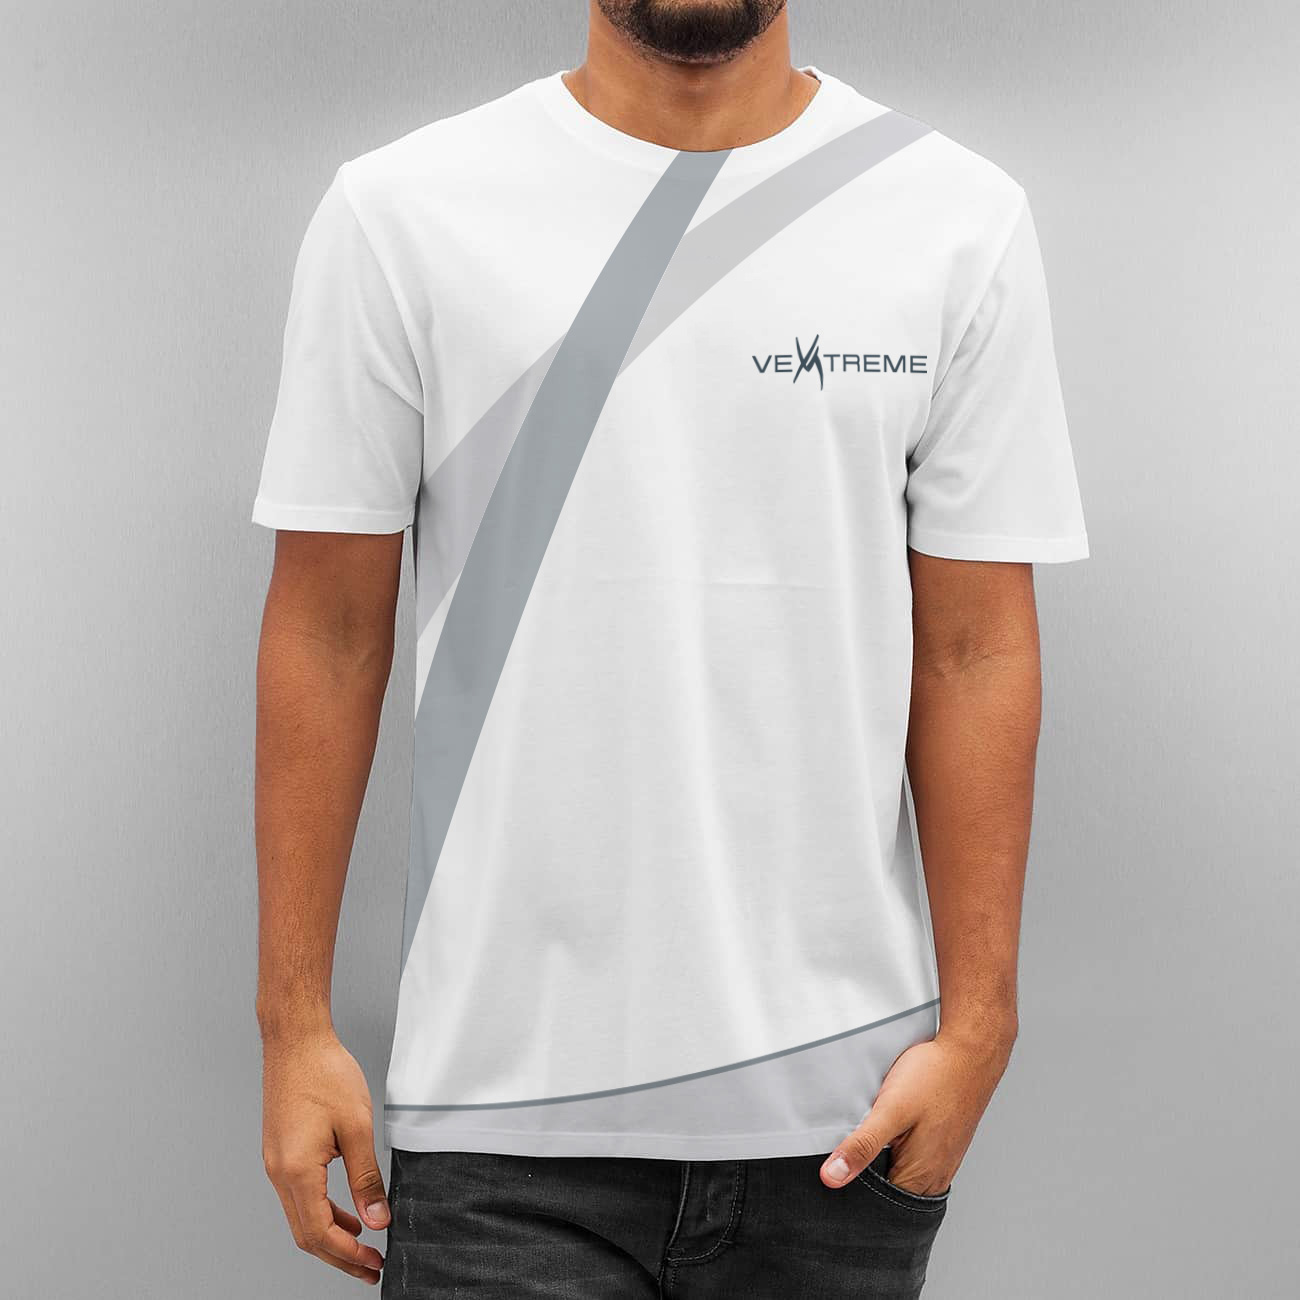 Vextreme | Shirt Design 1